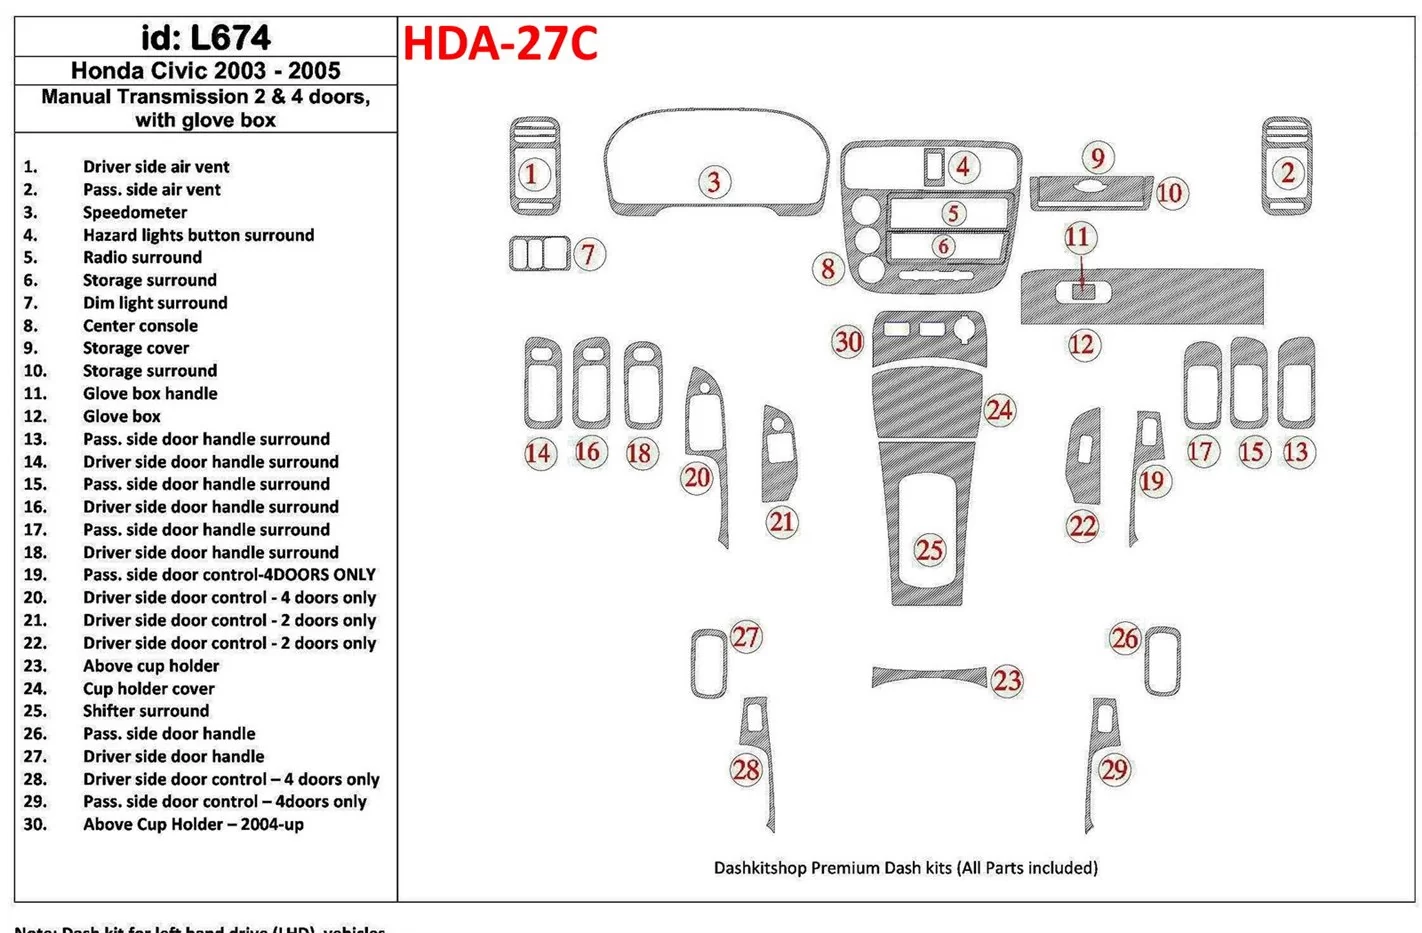 Honda Civic 2003-2005 Manual Gear Box, 2 or 4 Doors, with glowe-box BD Décoration de tableau de bord